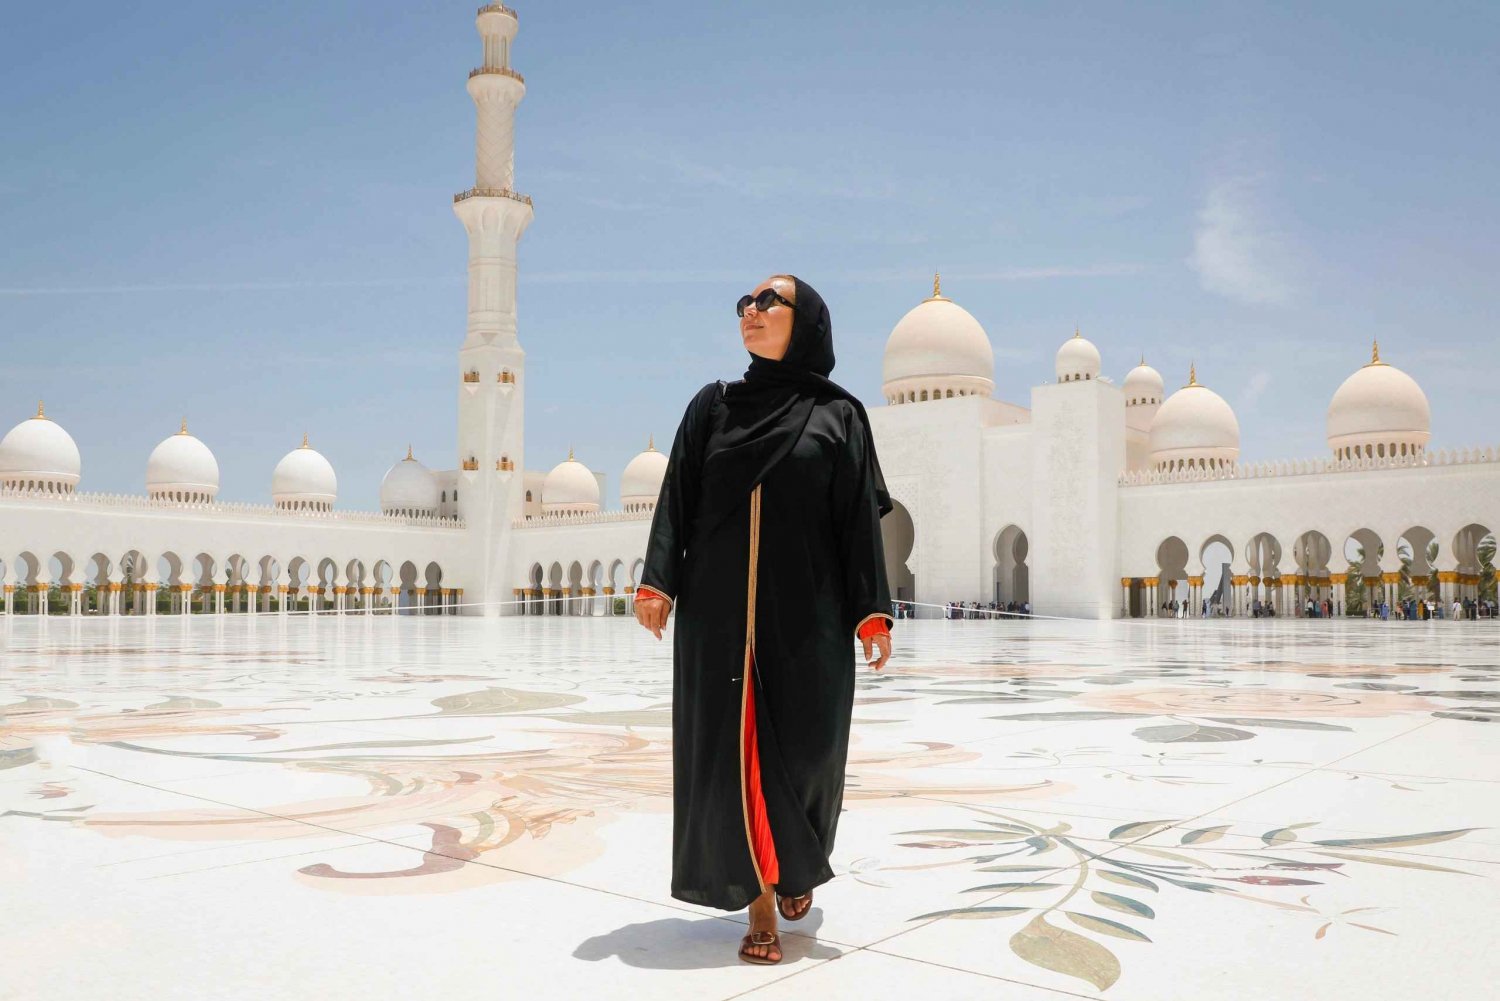 Abu Dhabi: Sheikh Zayed Grand Mosque Tour with Photographer